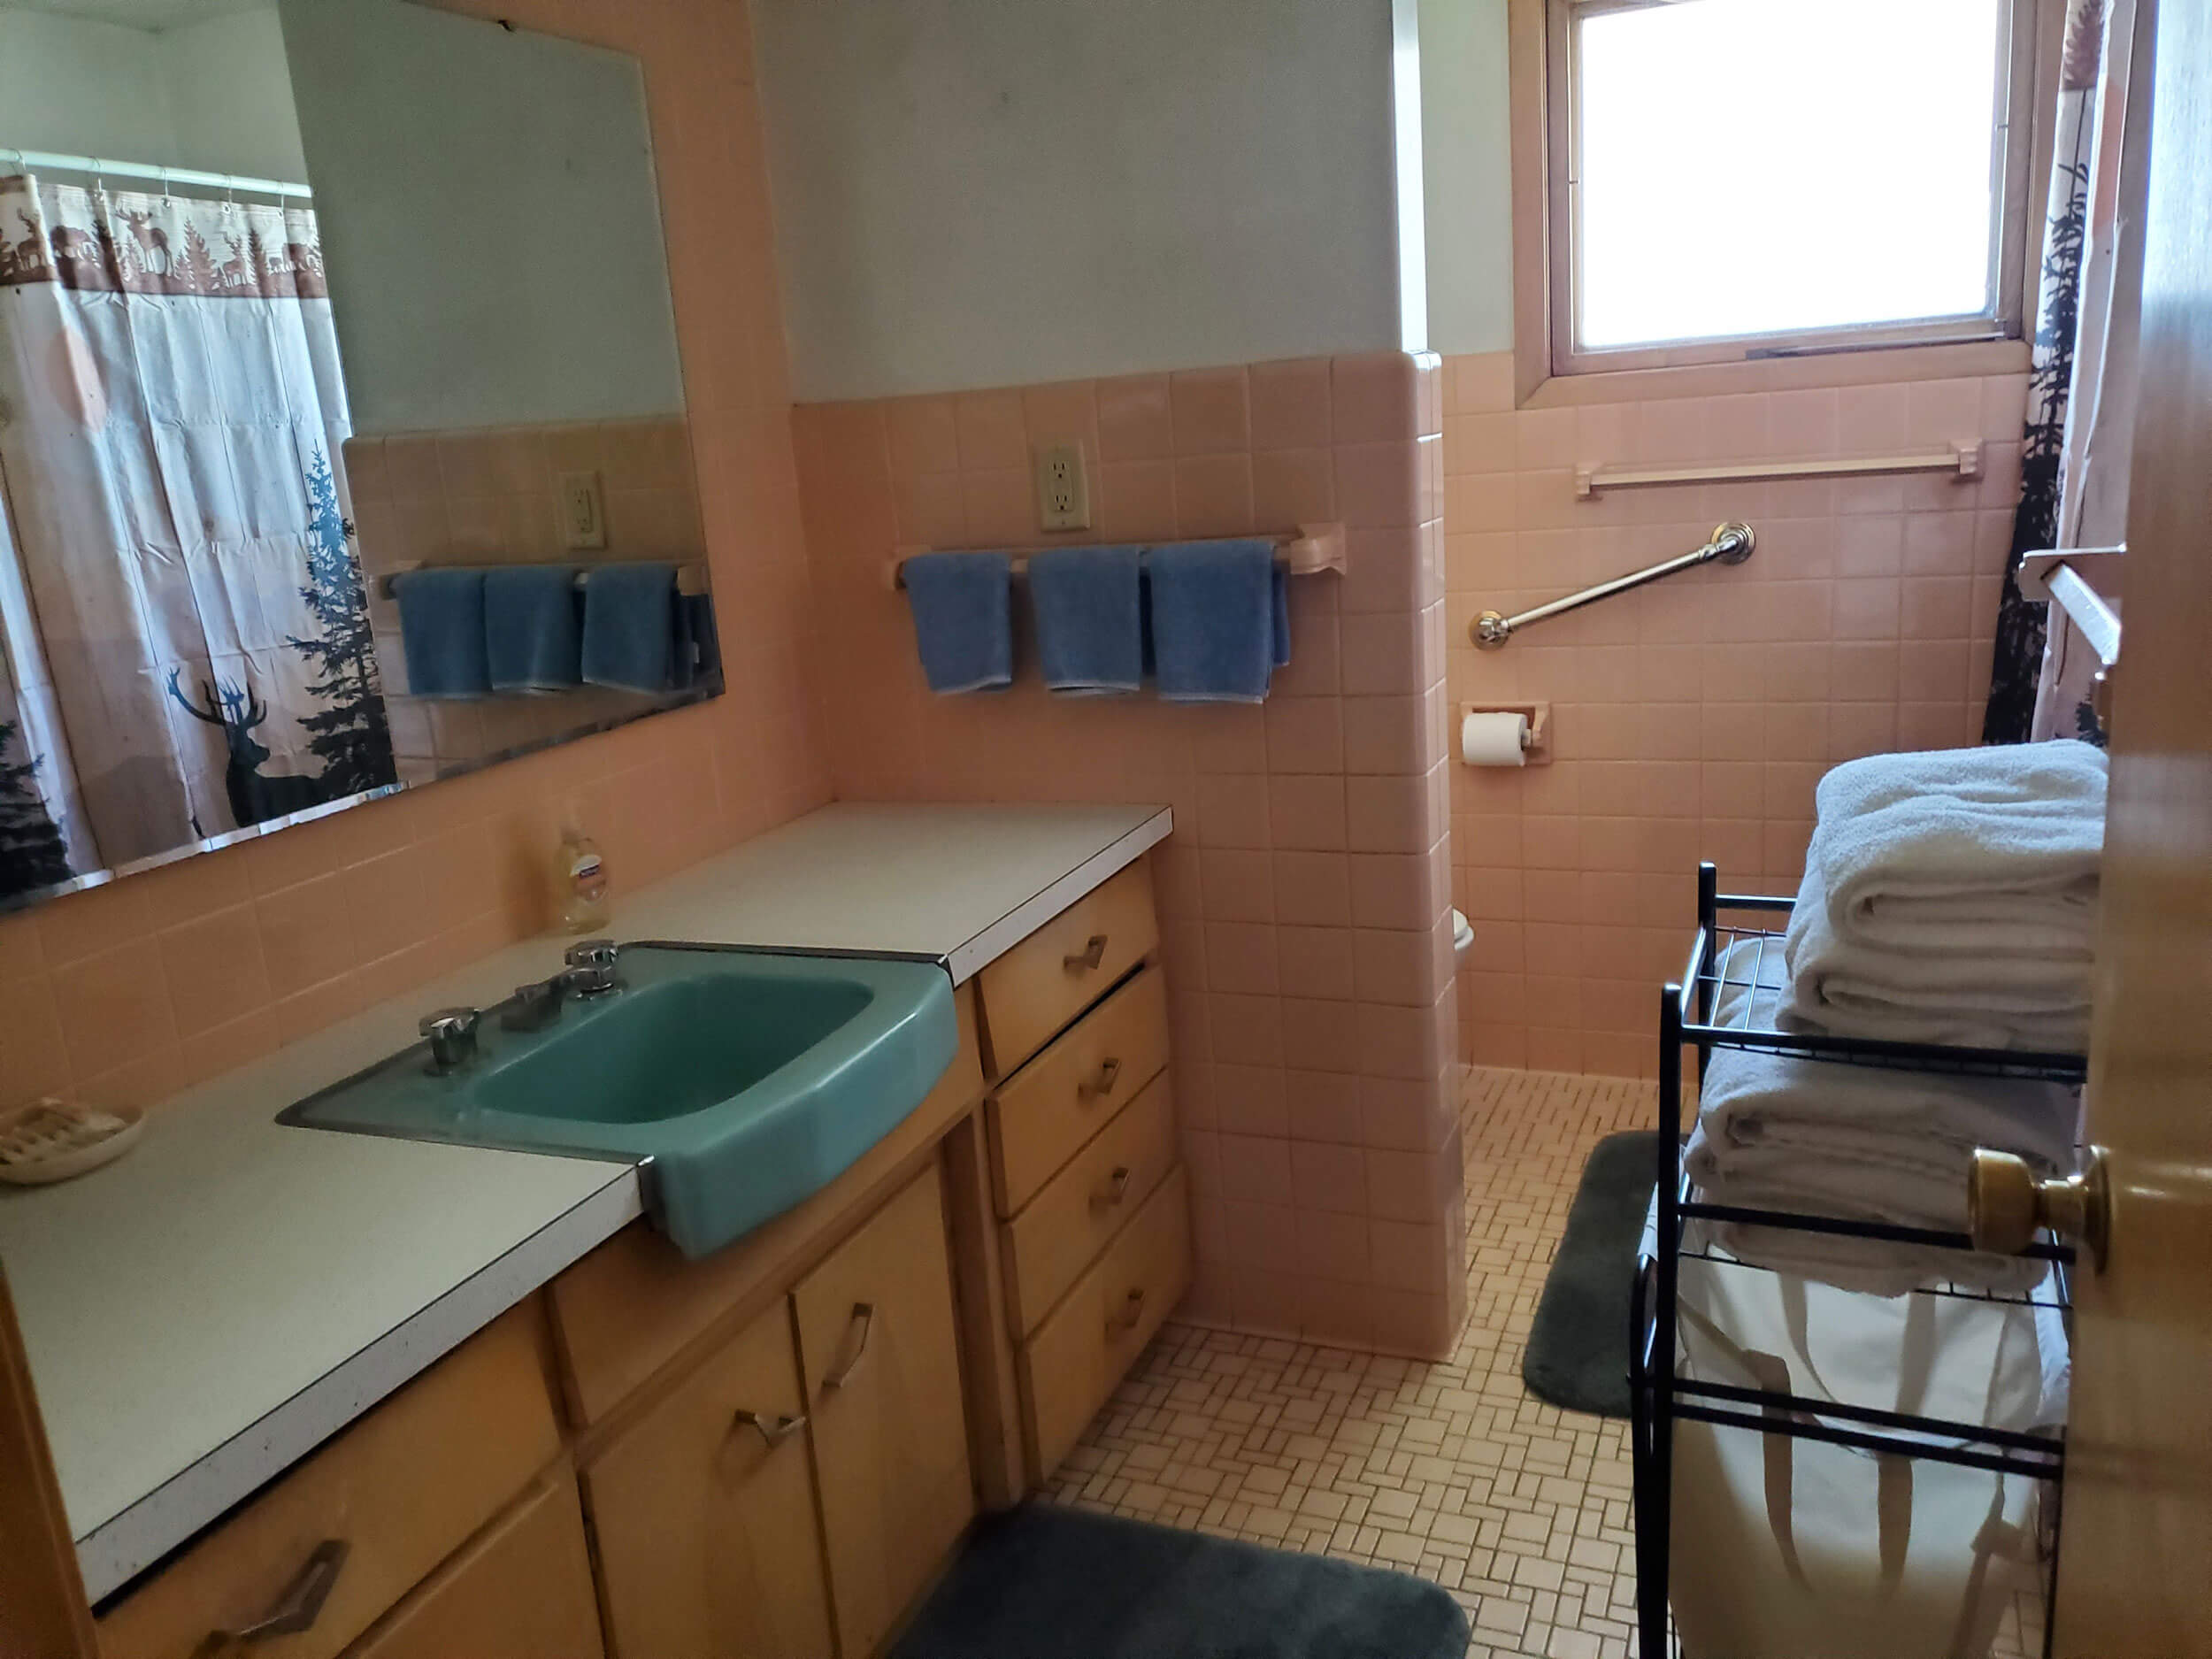 bathroom of guest house at rutting ridge motel